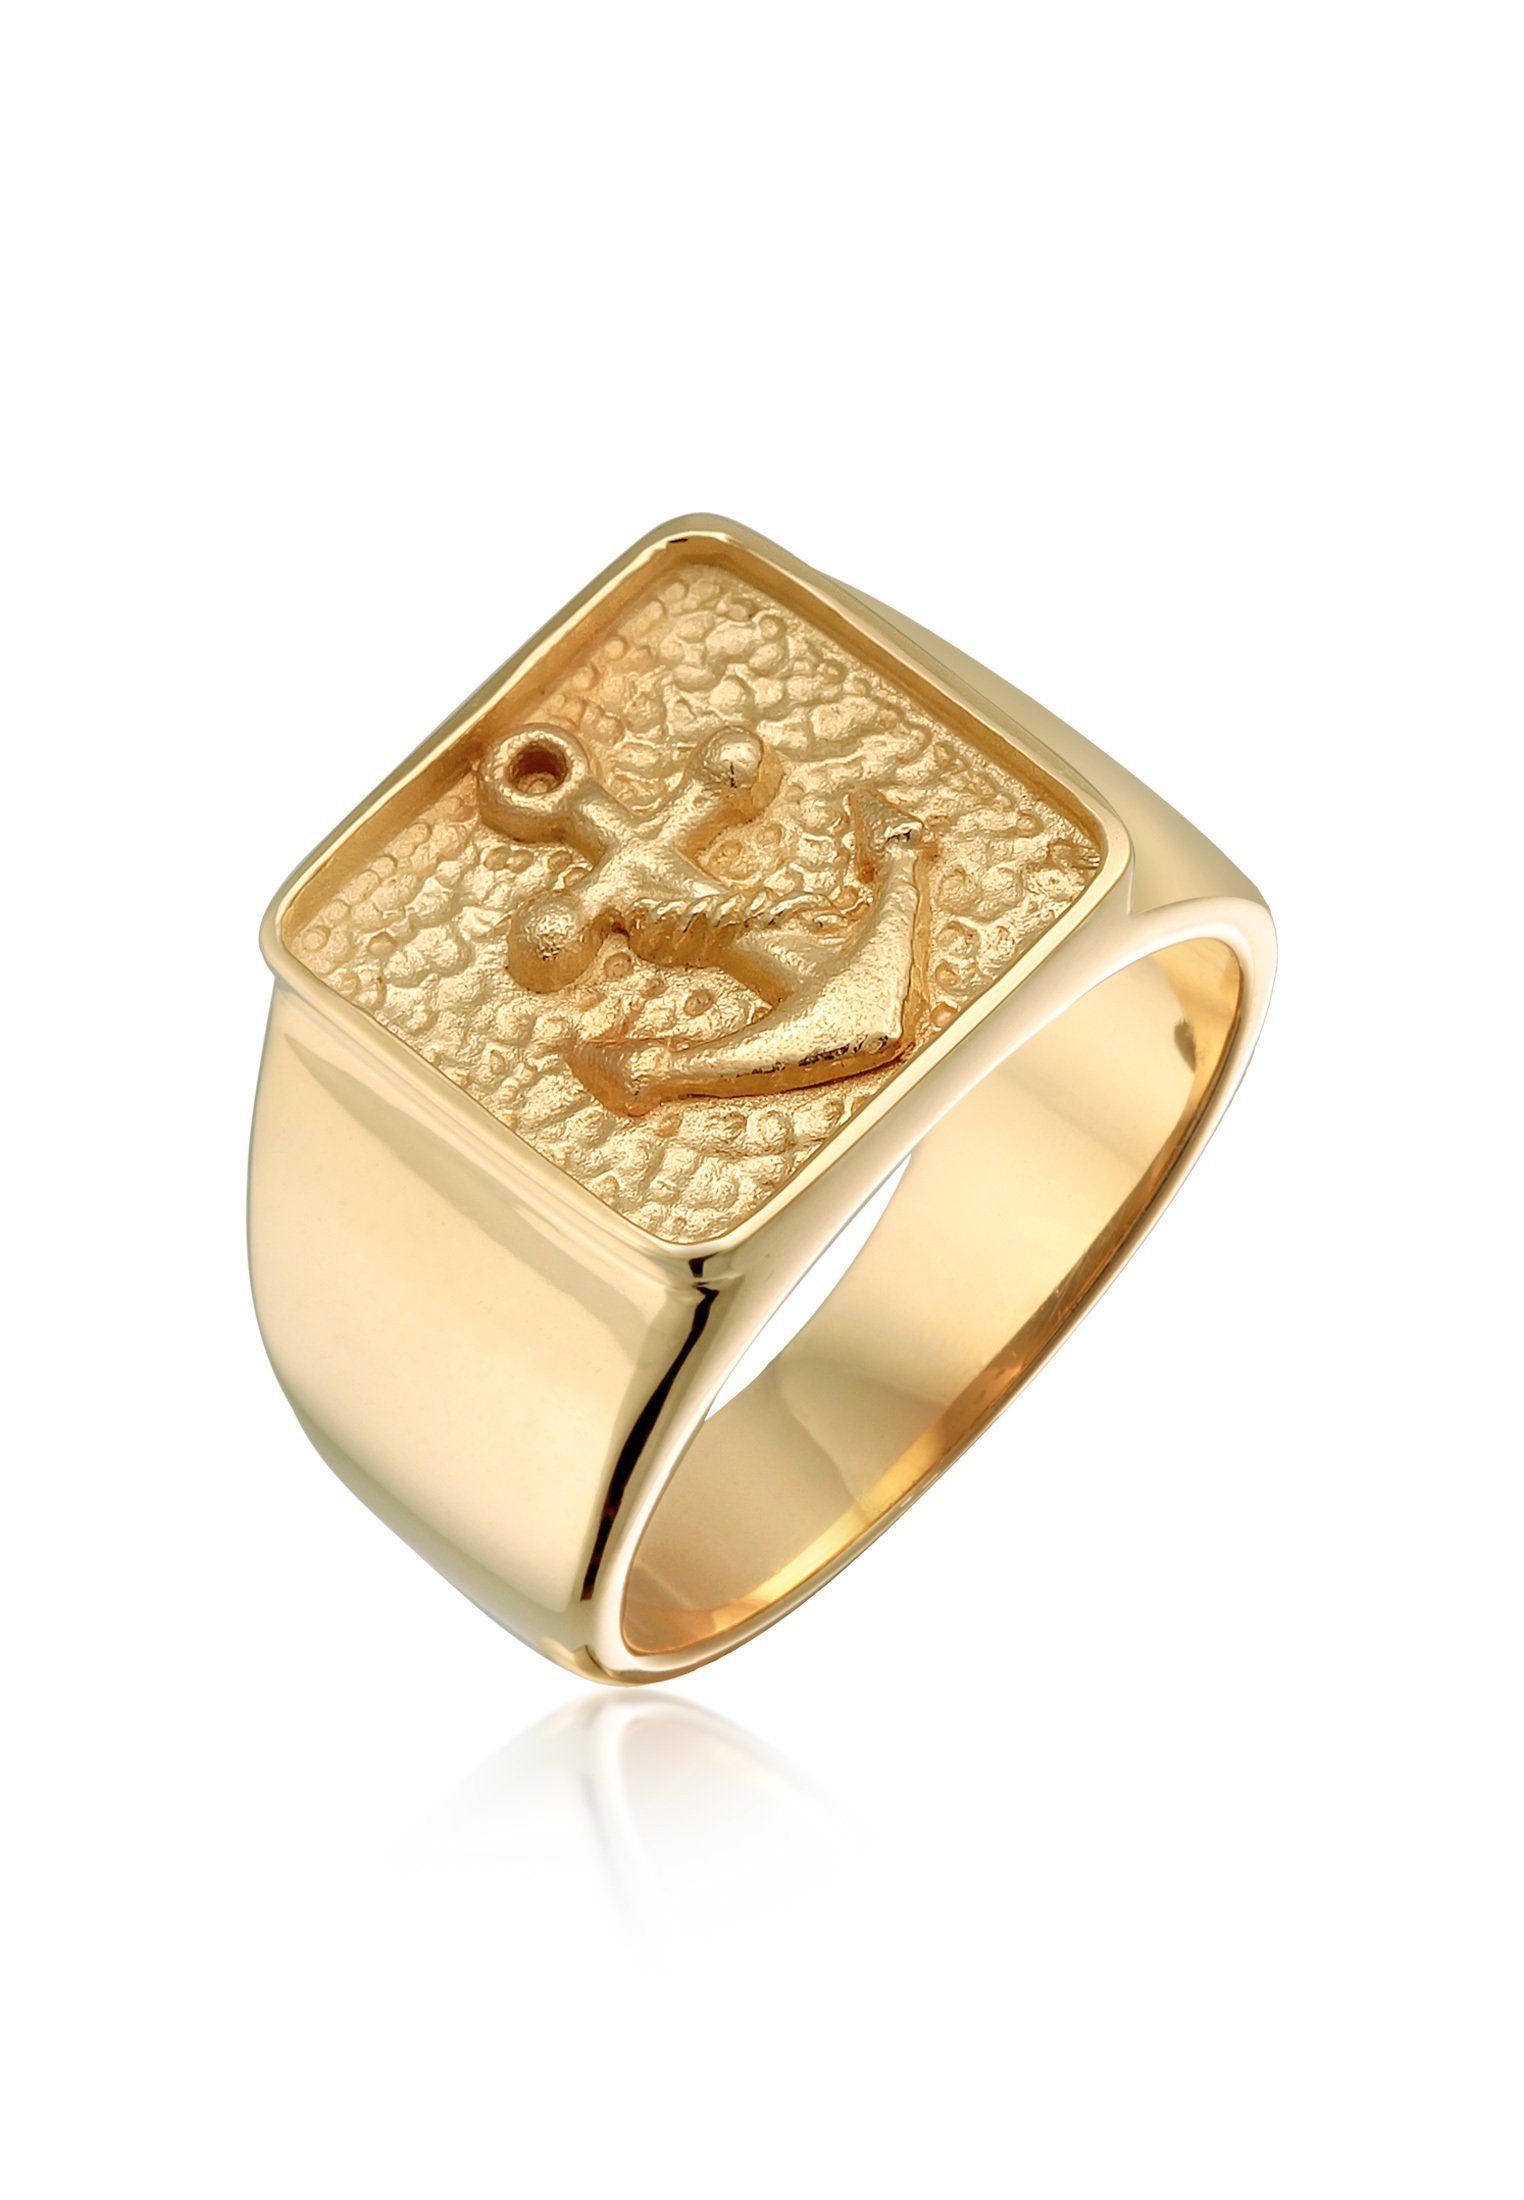 Kuzzoi Siegelring Herren Gold Siegelring 925 Anker Silber Symbol Oxidiert